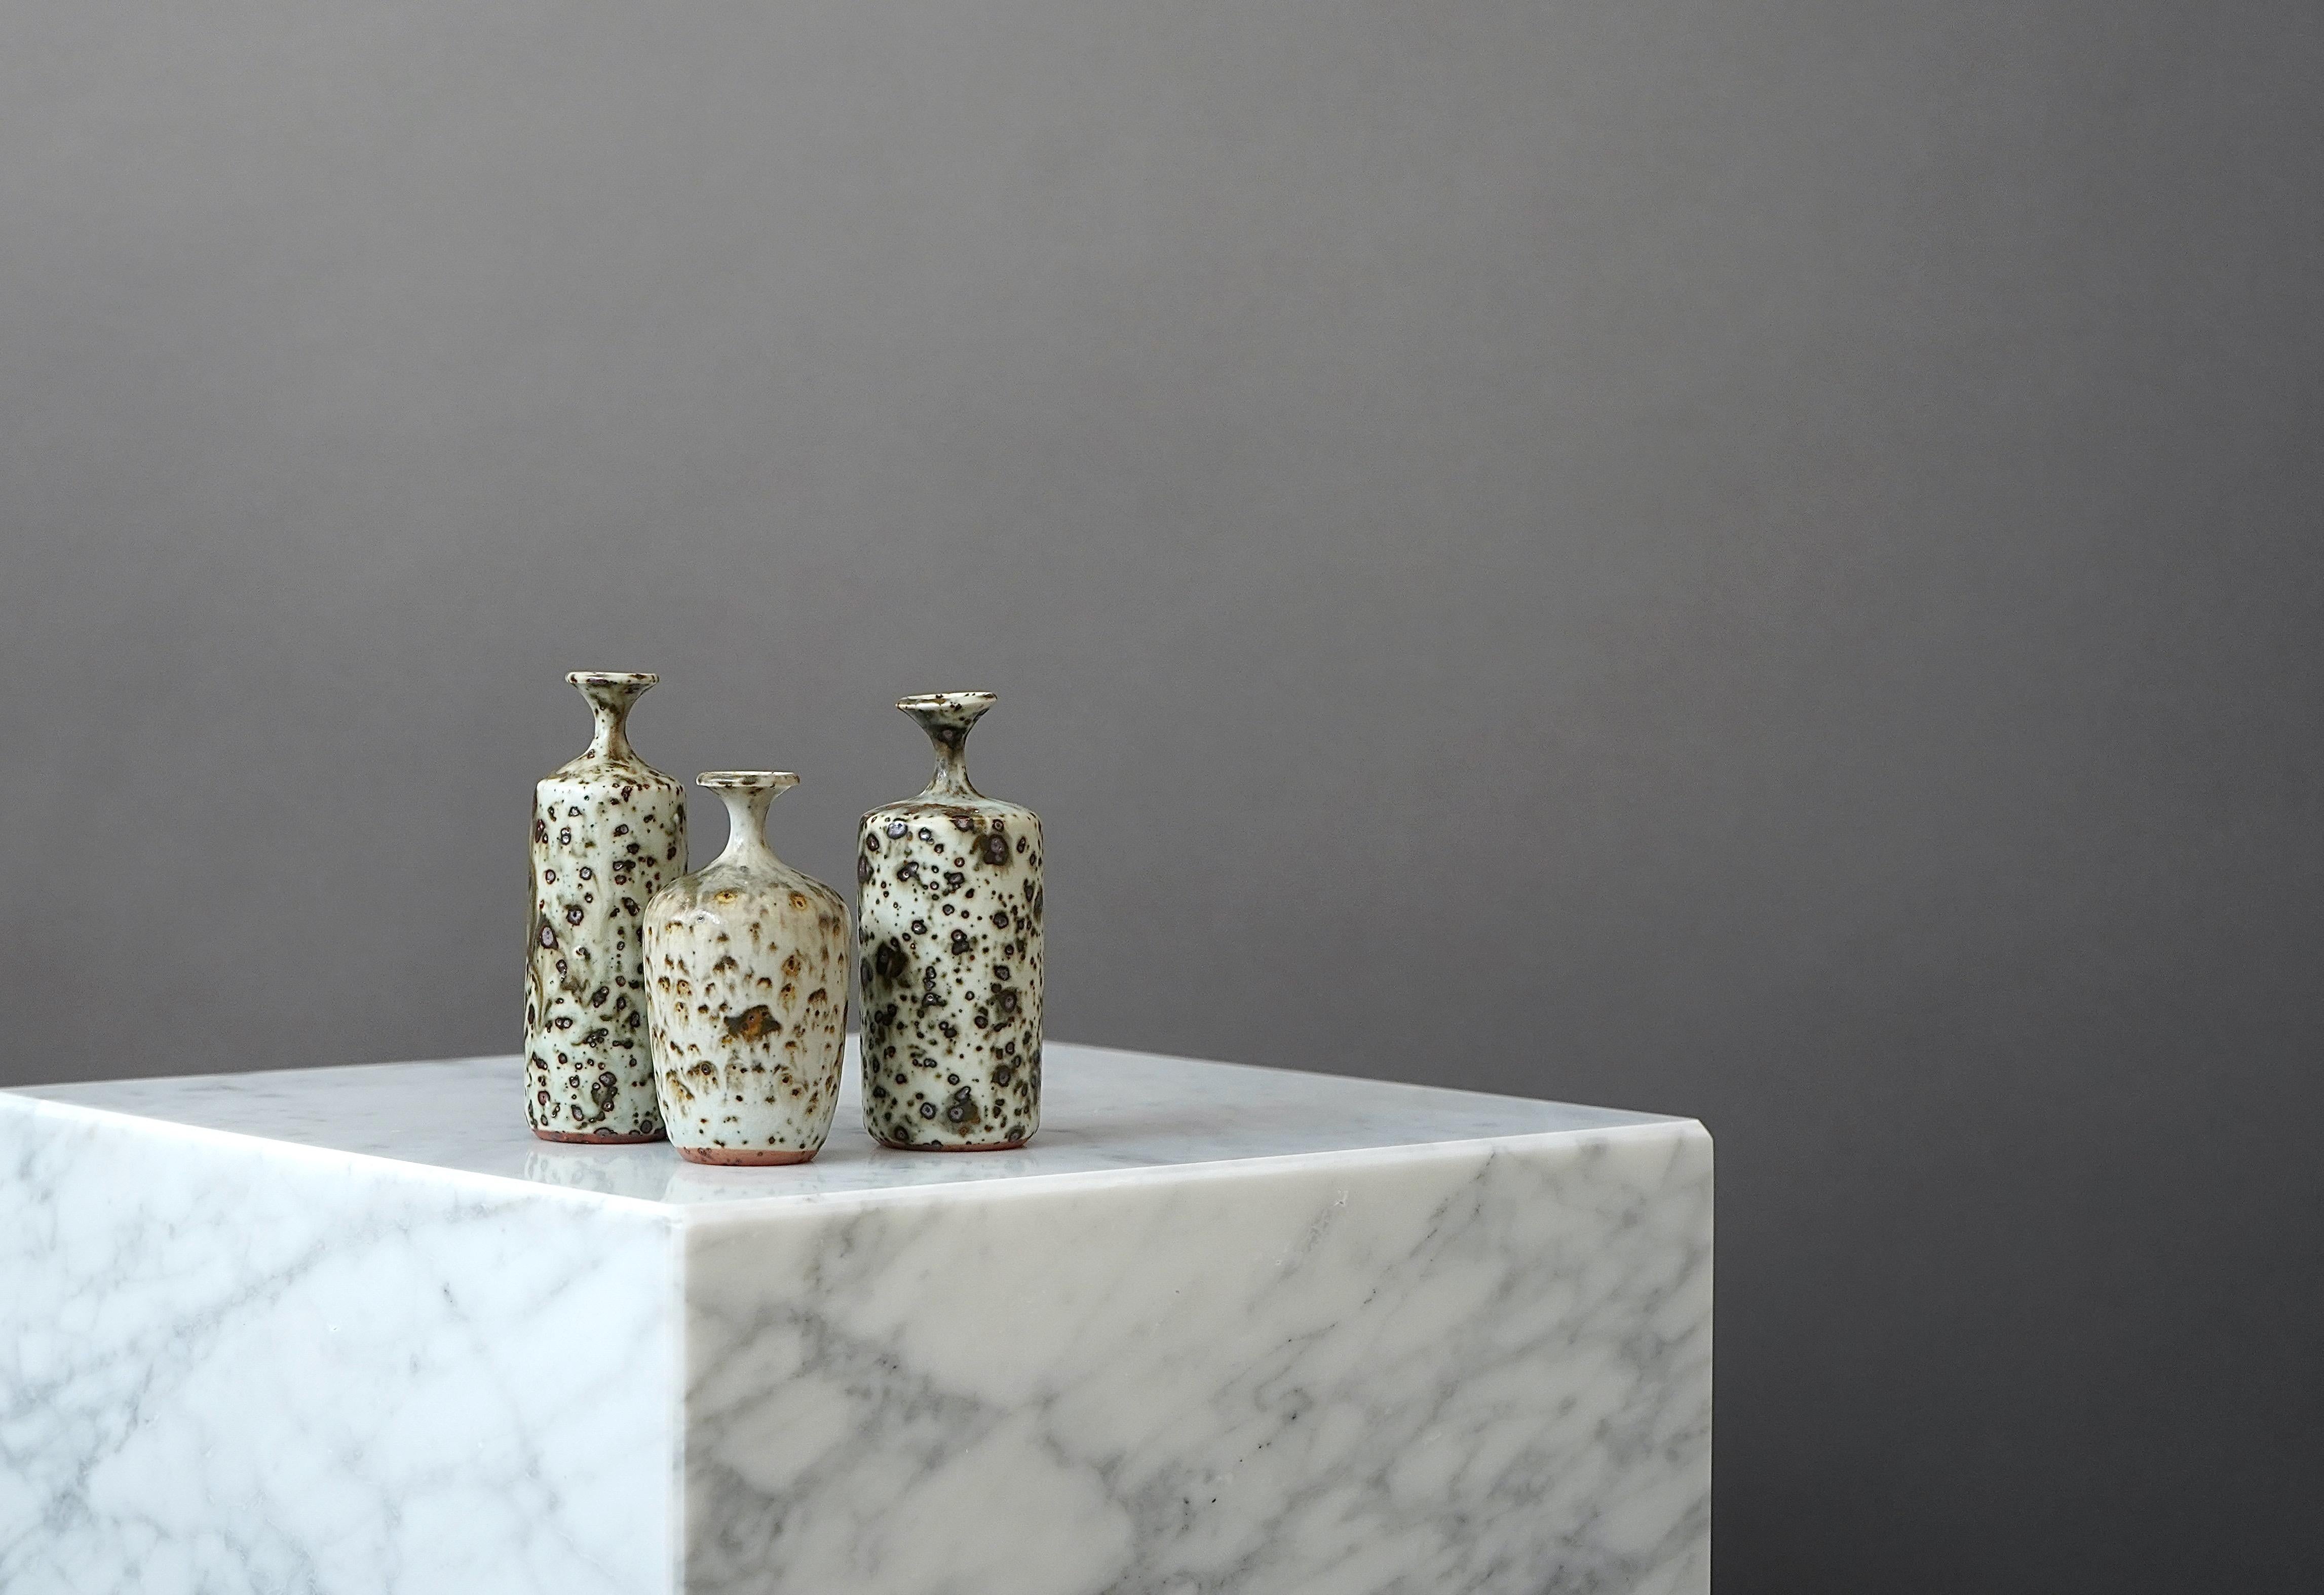 Turned Set of 3 Stoneware Vases by Swedish Ceramist Rolf Palm, 1973 For Sale